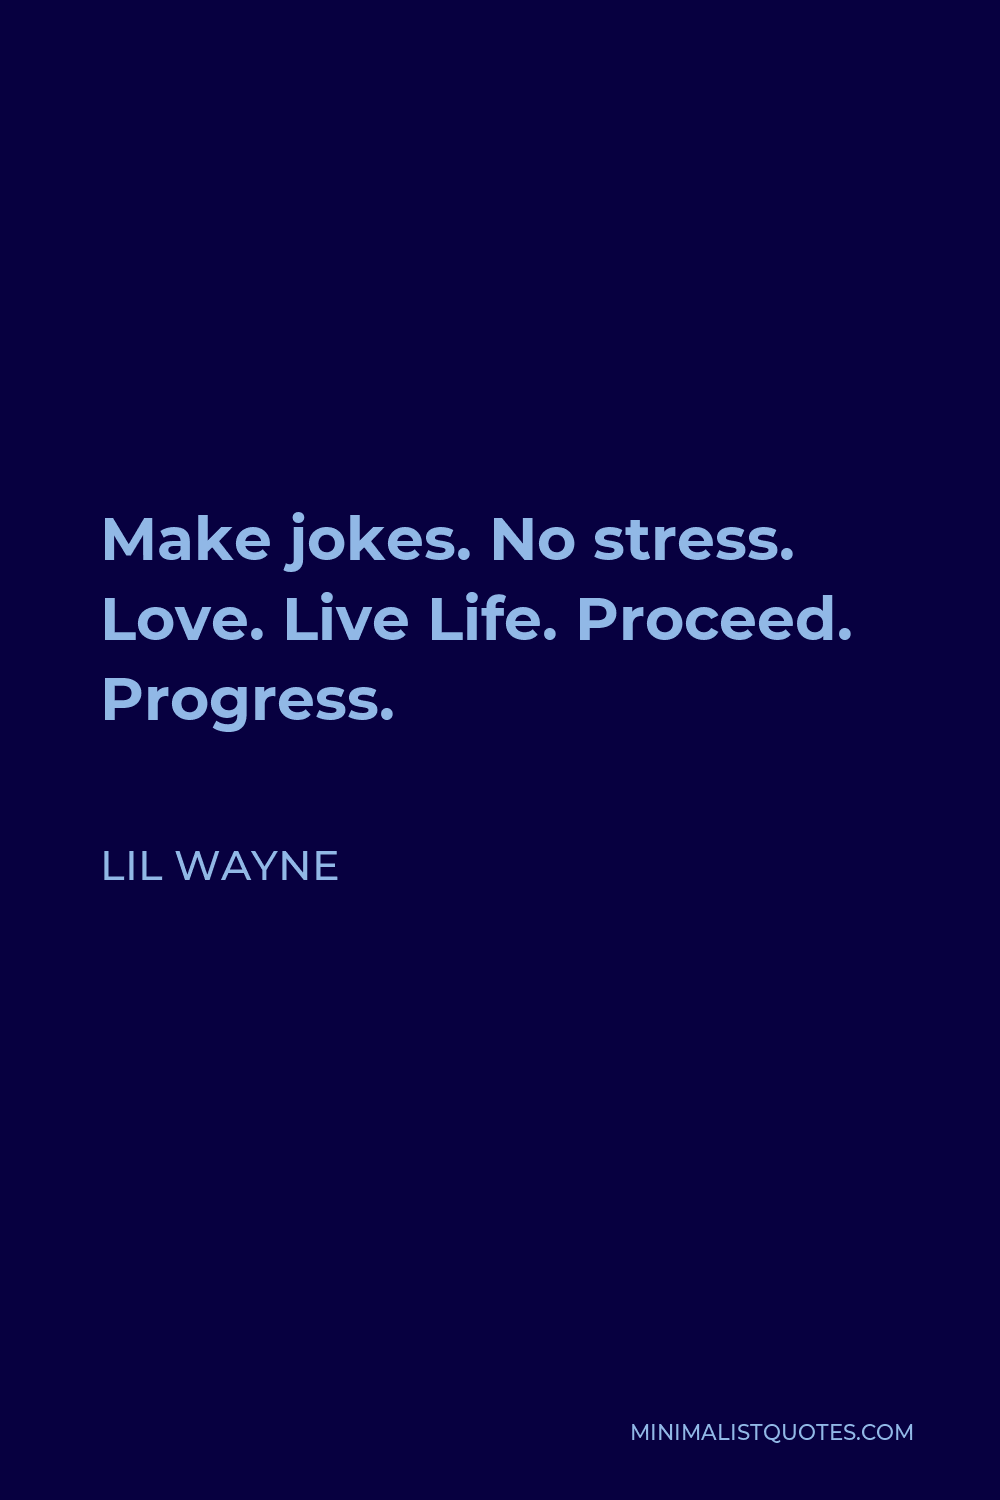 Lil Wayne Quote - Make jokes. No stress. Love. Live Life. Proceed. Progress.